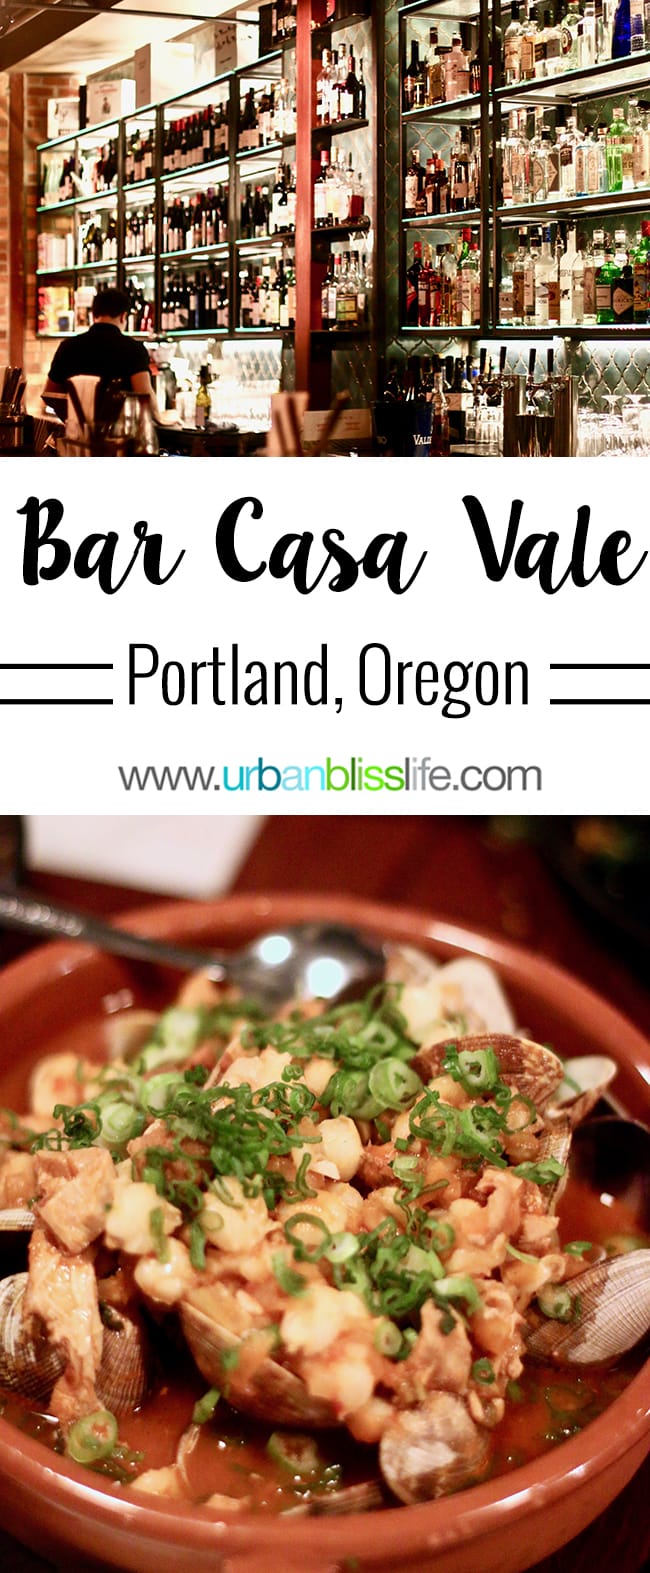 Bar Casa Vale Portland, Oregon Spanish Tapas Bar and Restaurant